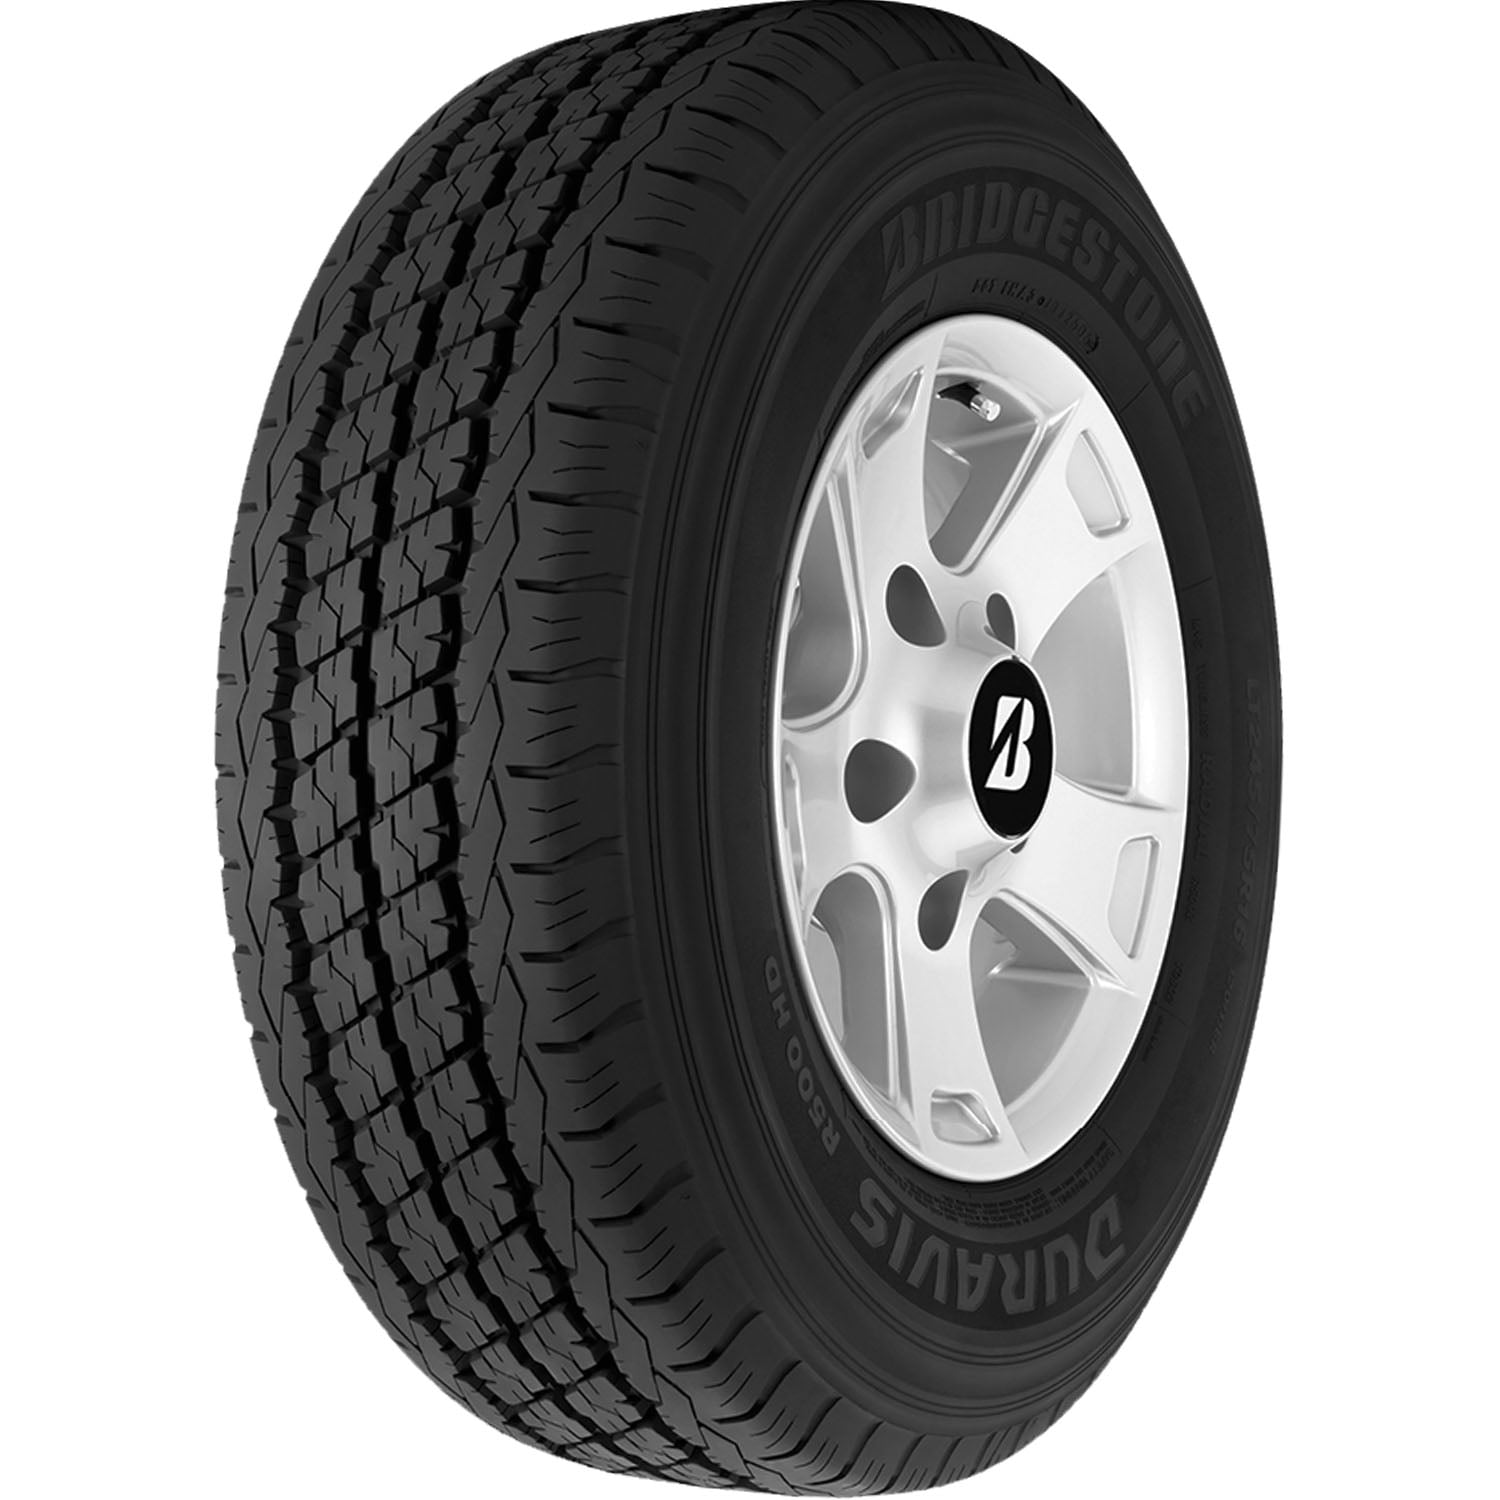 Bridgestone Duravis R500 HD All Season LT245/70R17 119/116R E Light Truck Tire